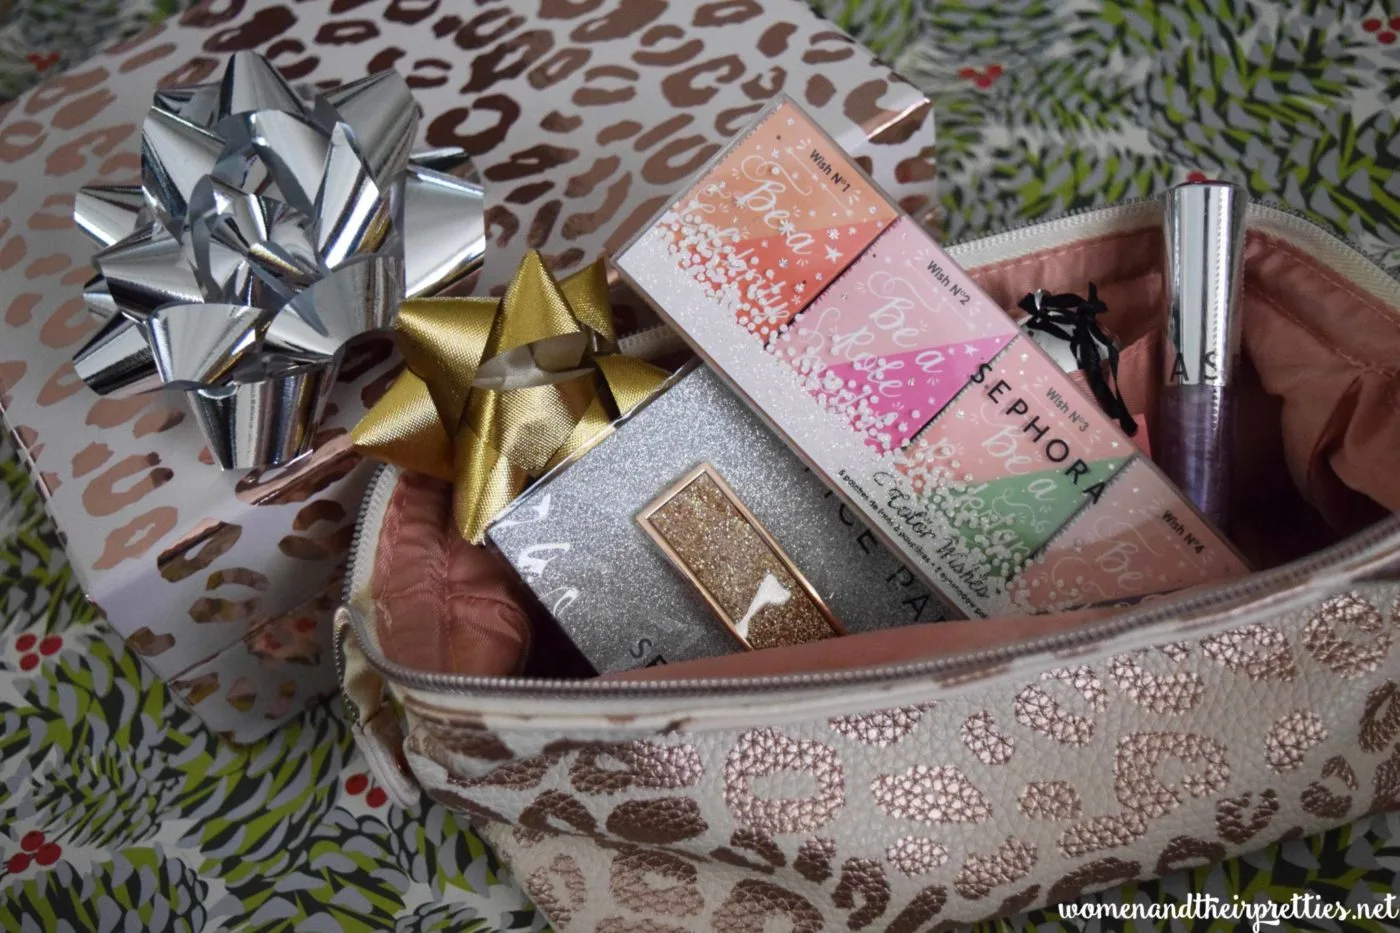 Holiday Gifts Sephora #Beauty #GiftsForHer #StockingStuffers